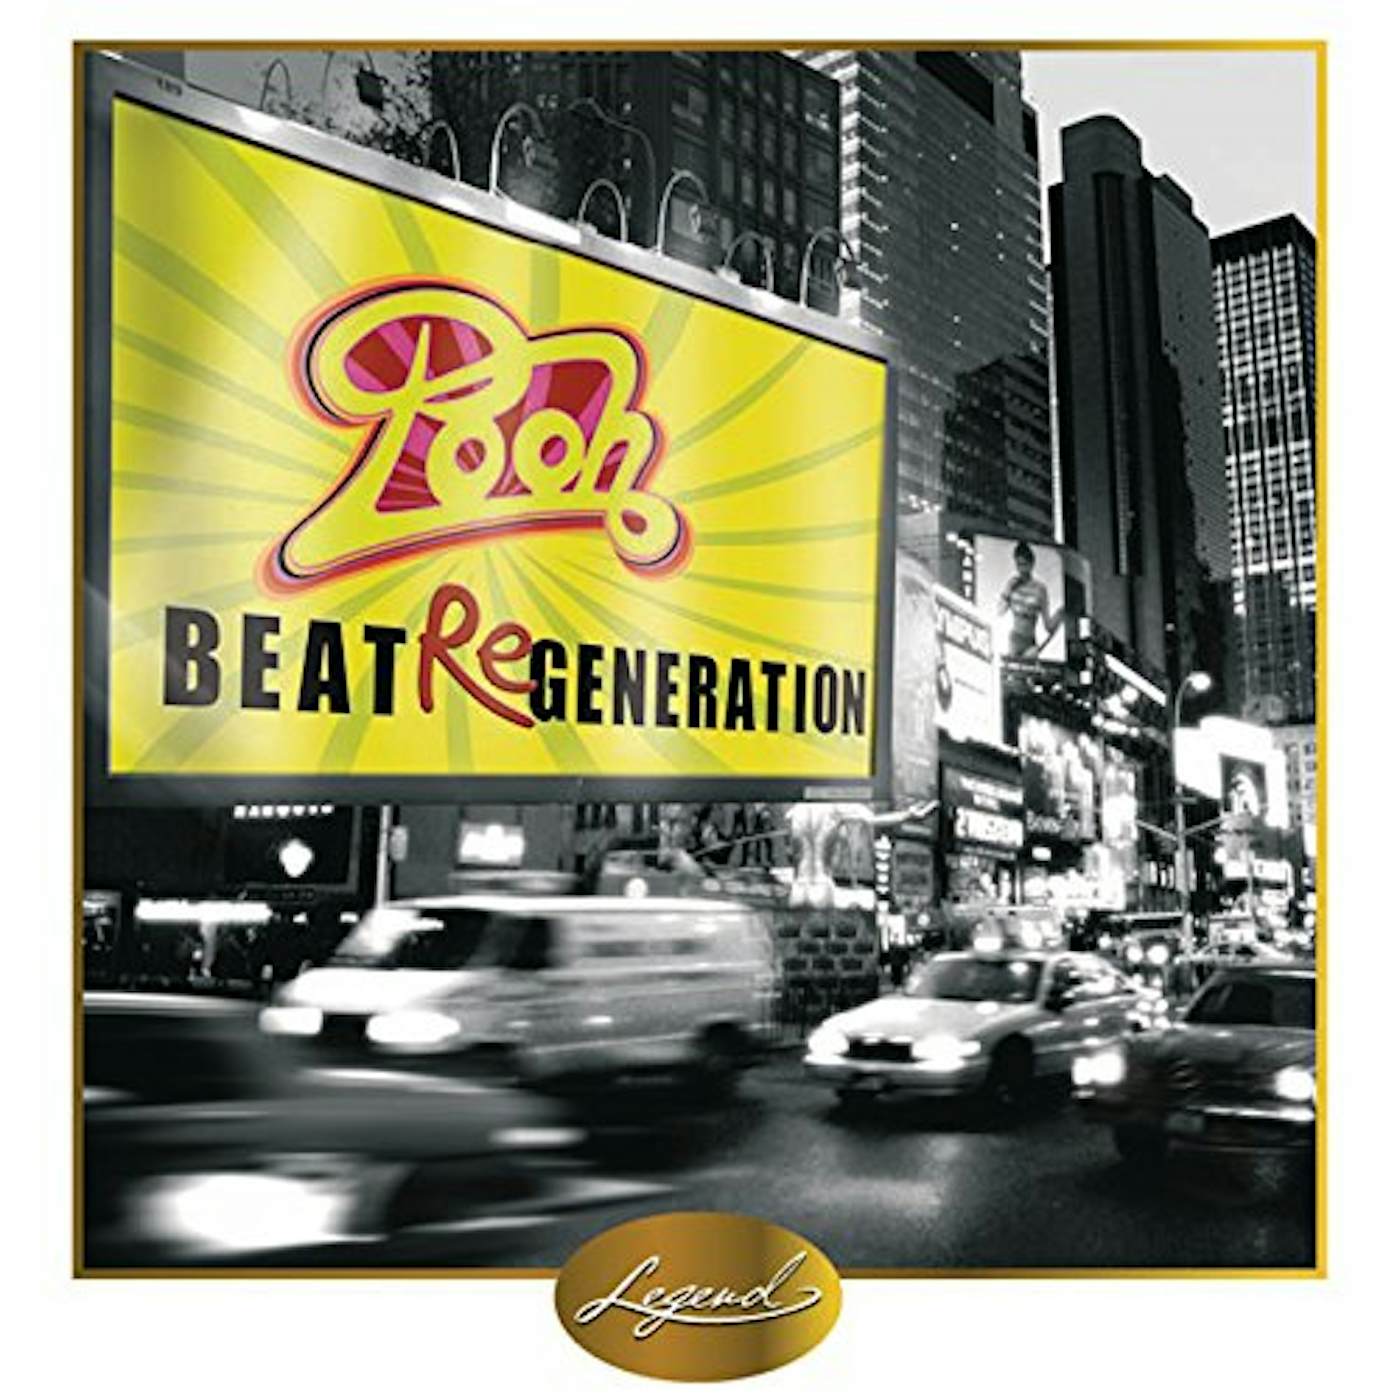 Pooh BEAT REGENERATION CD